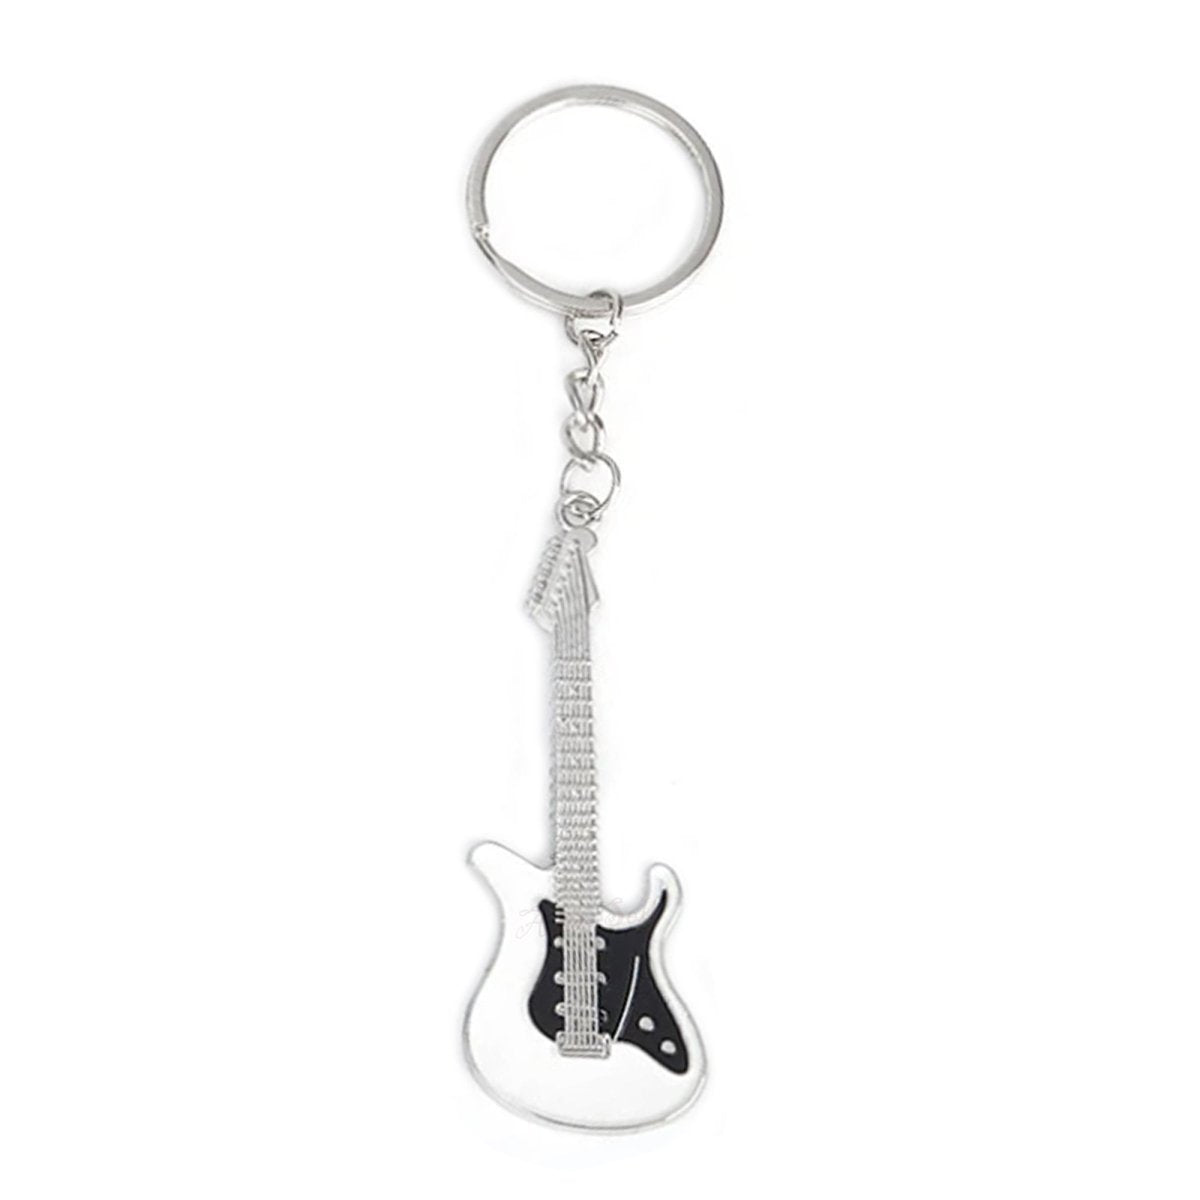 30mm Keyring Guitar Keychain 7.5cm Key Ring Key Chain Bag Accessory Holder Pendant Tag - White Black - - Asia Sell